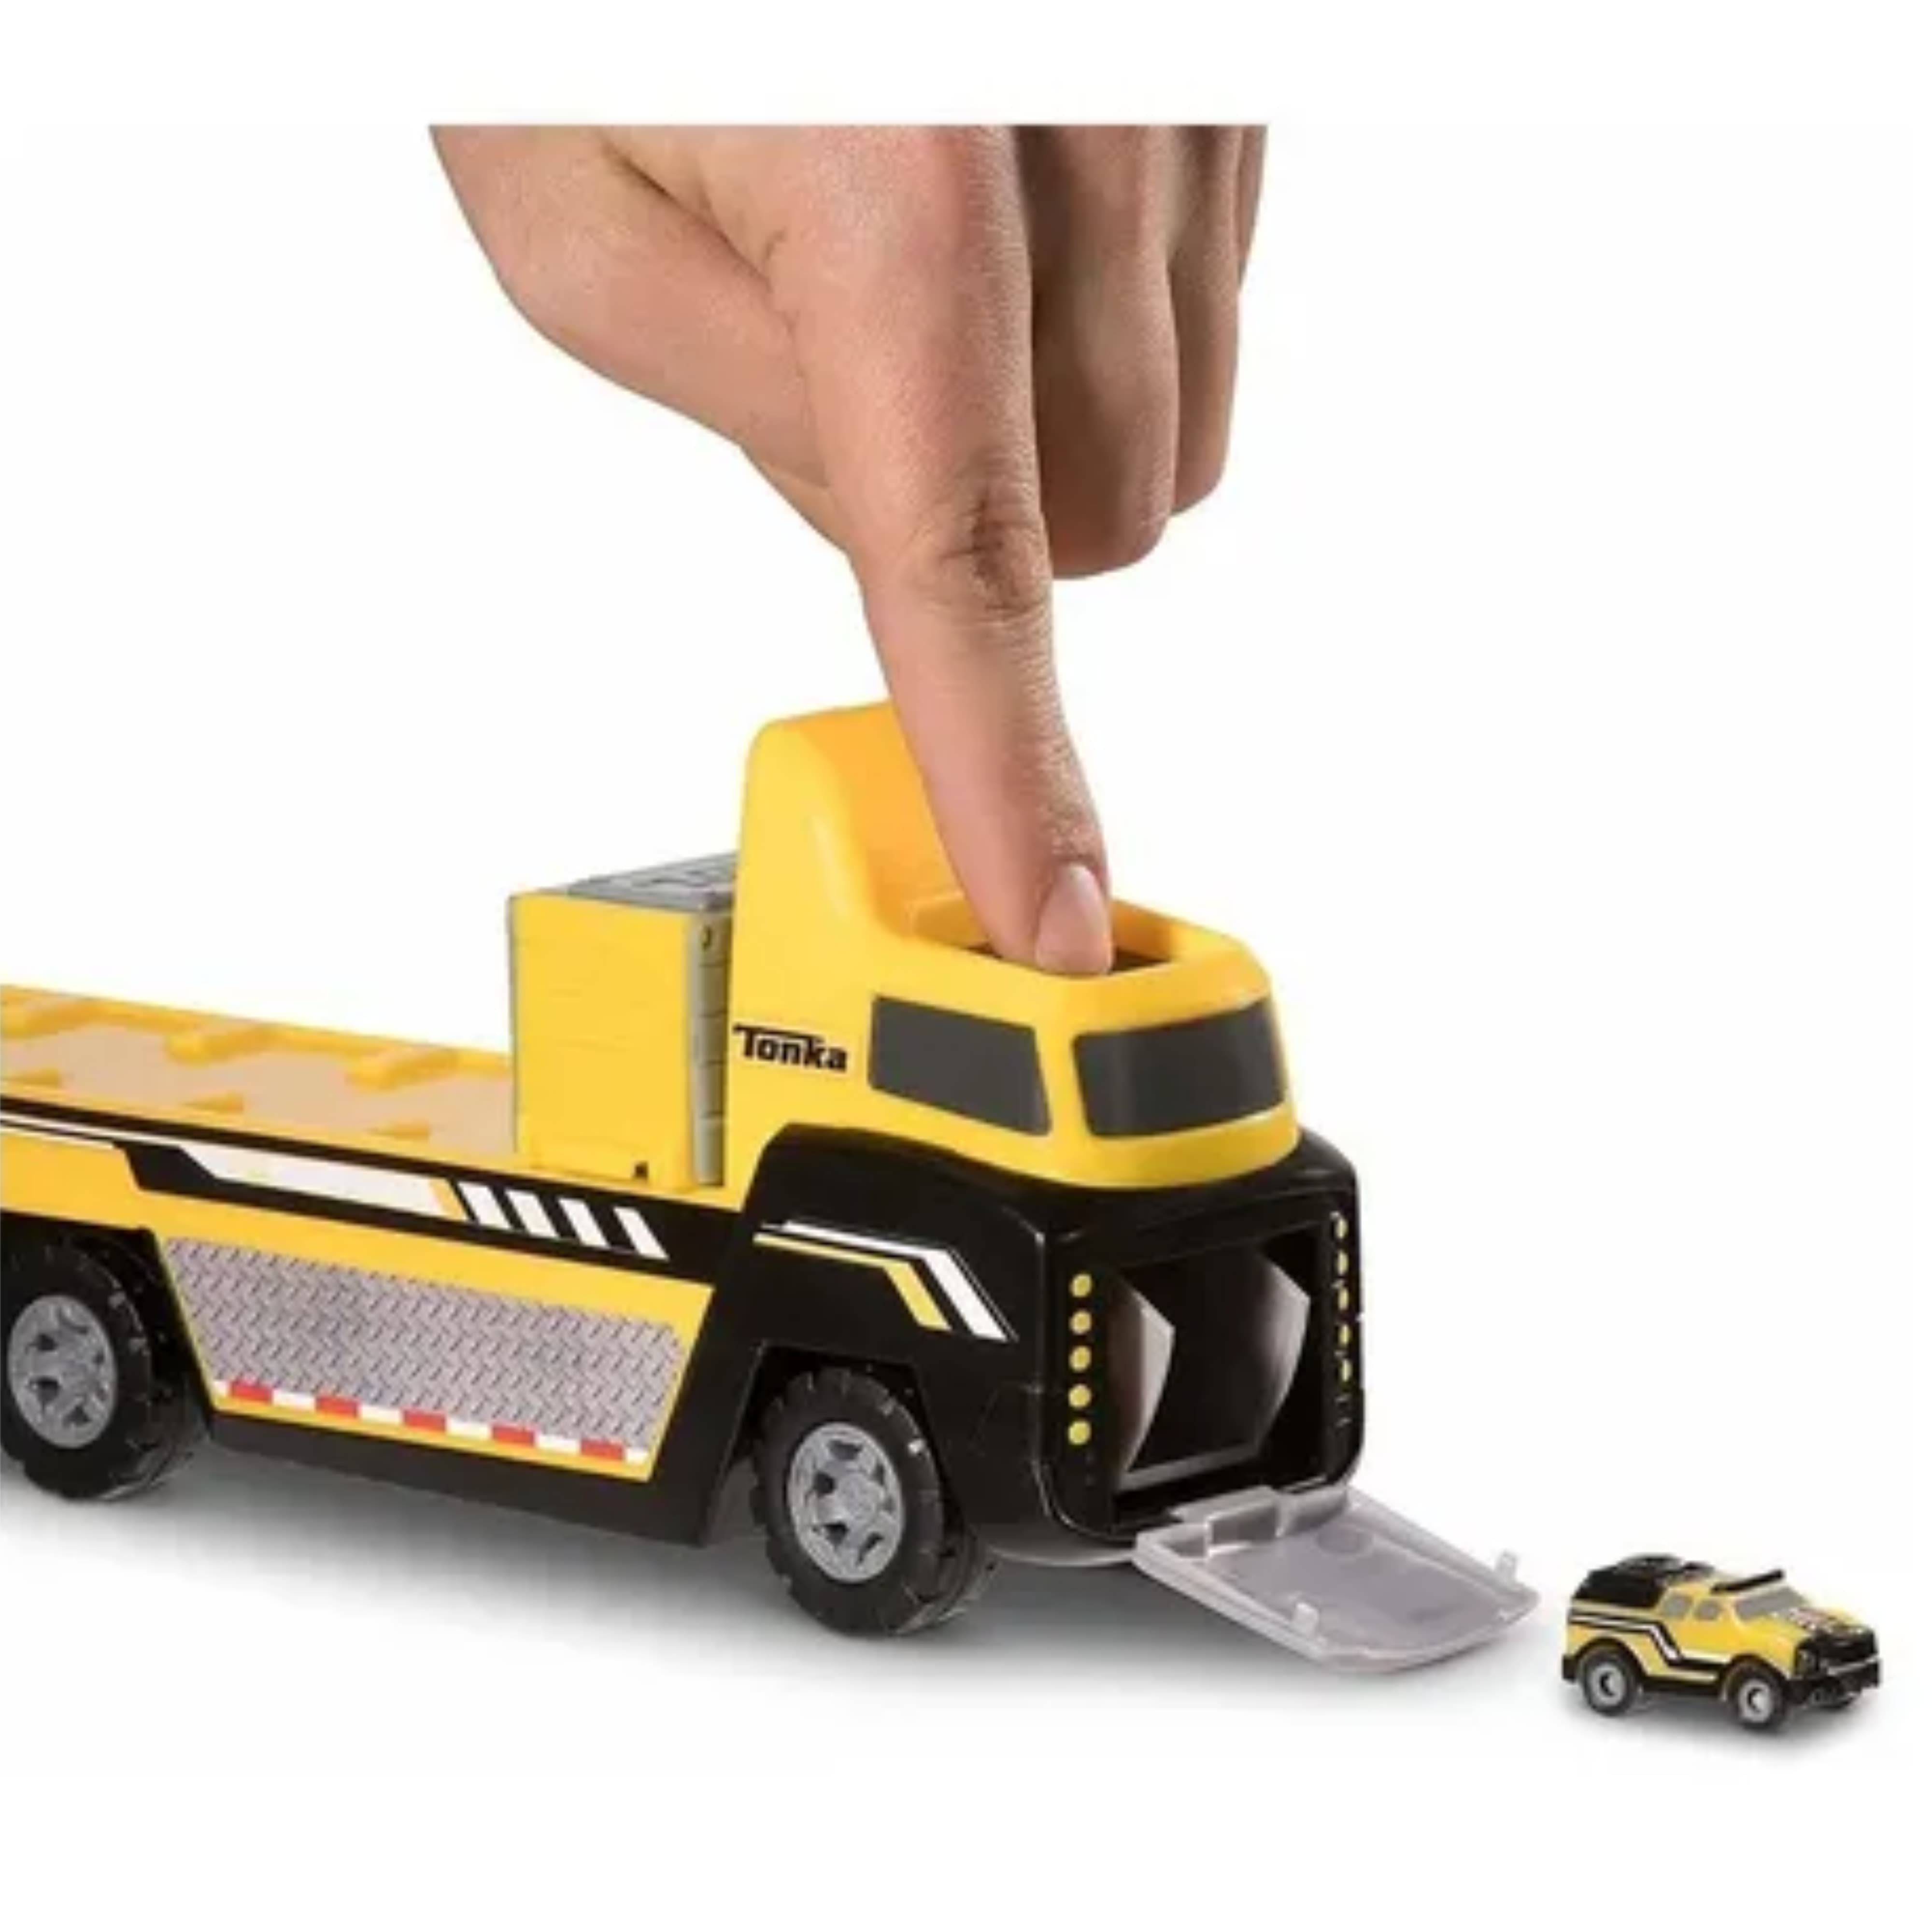 Tonka Tinys Toy Car Carrier Truck Lorry - Toptoys2u